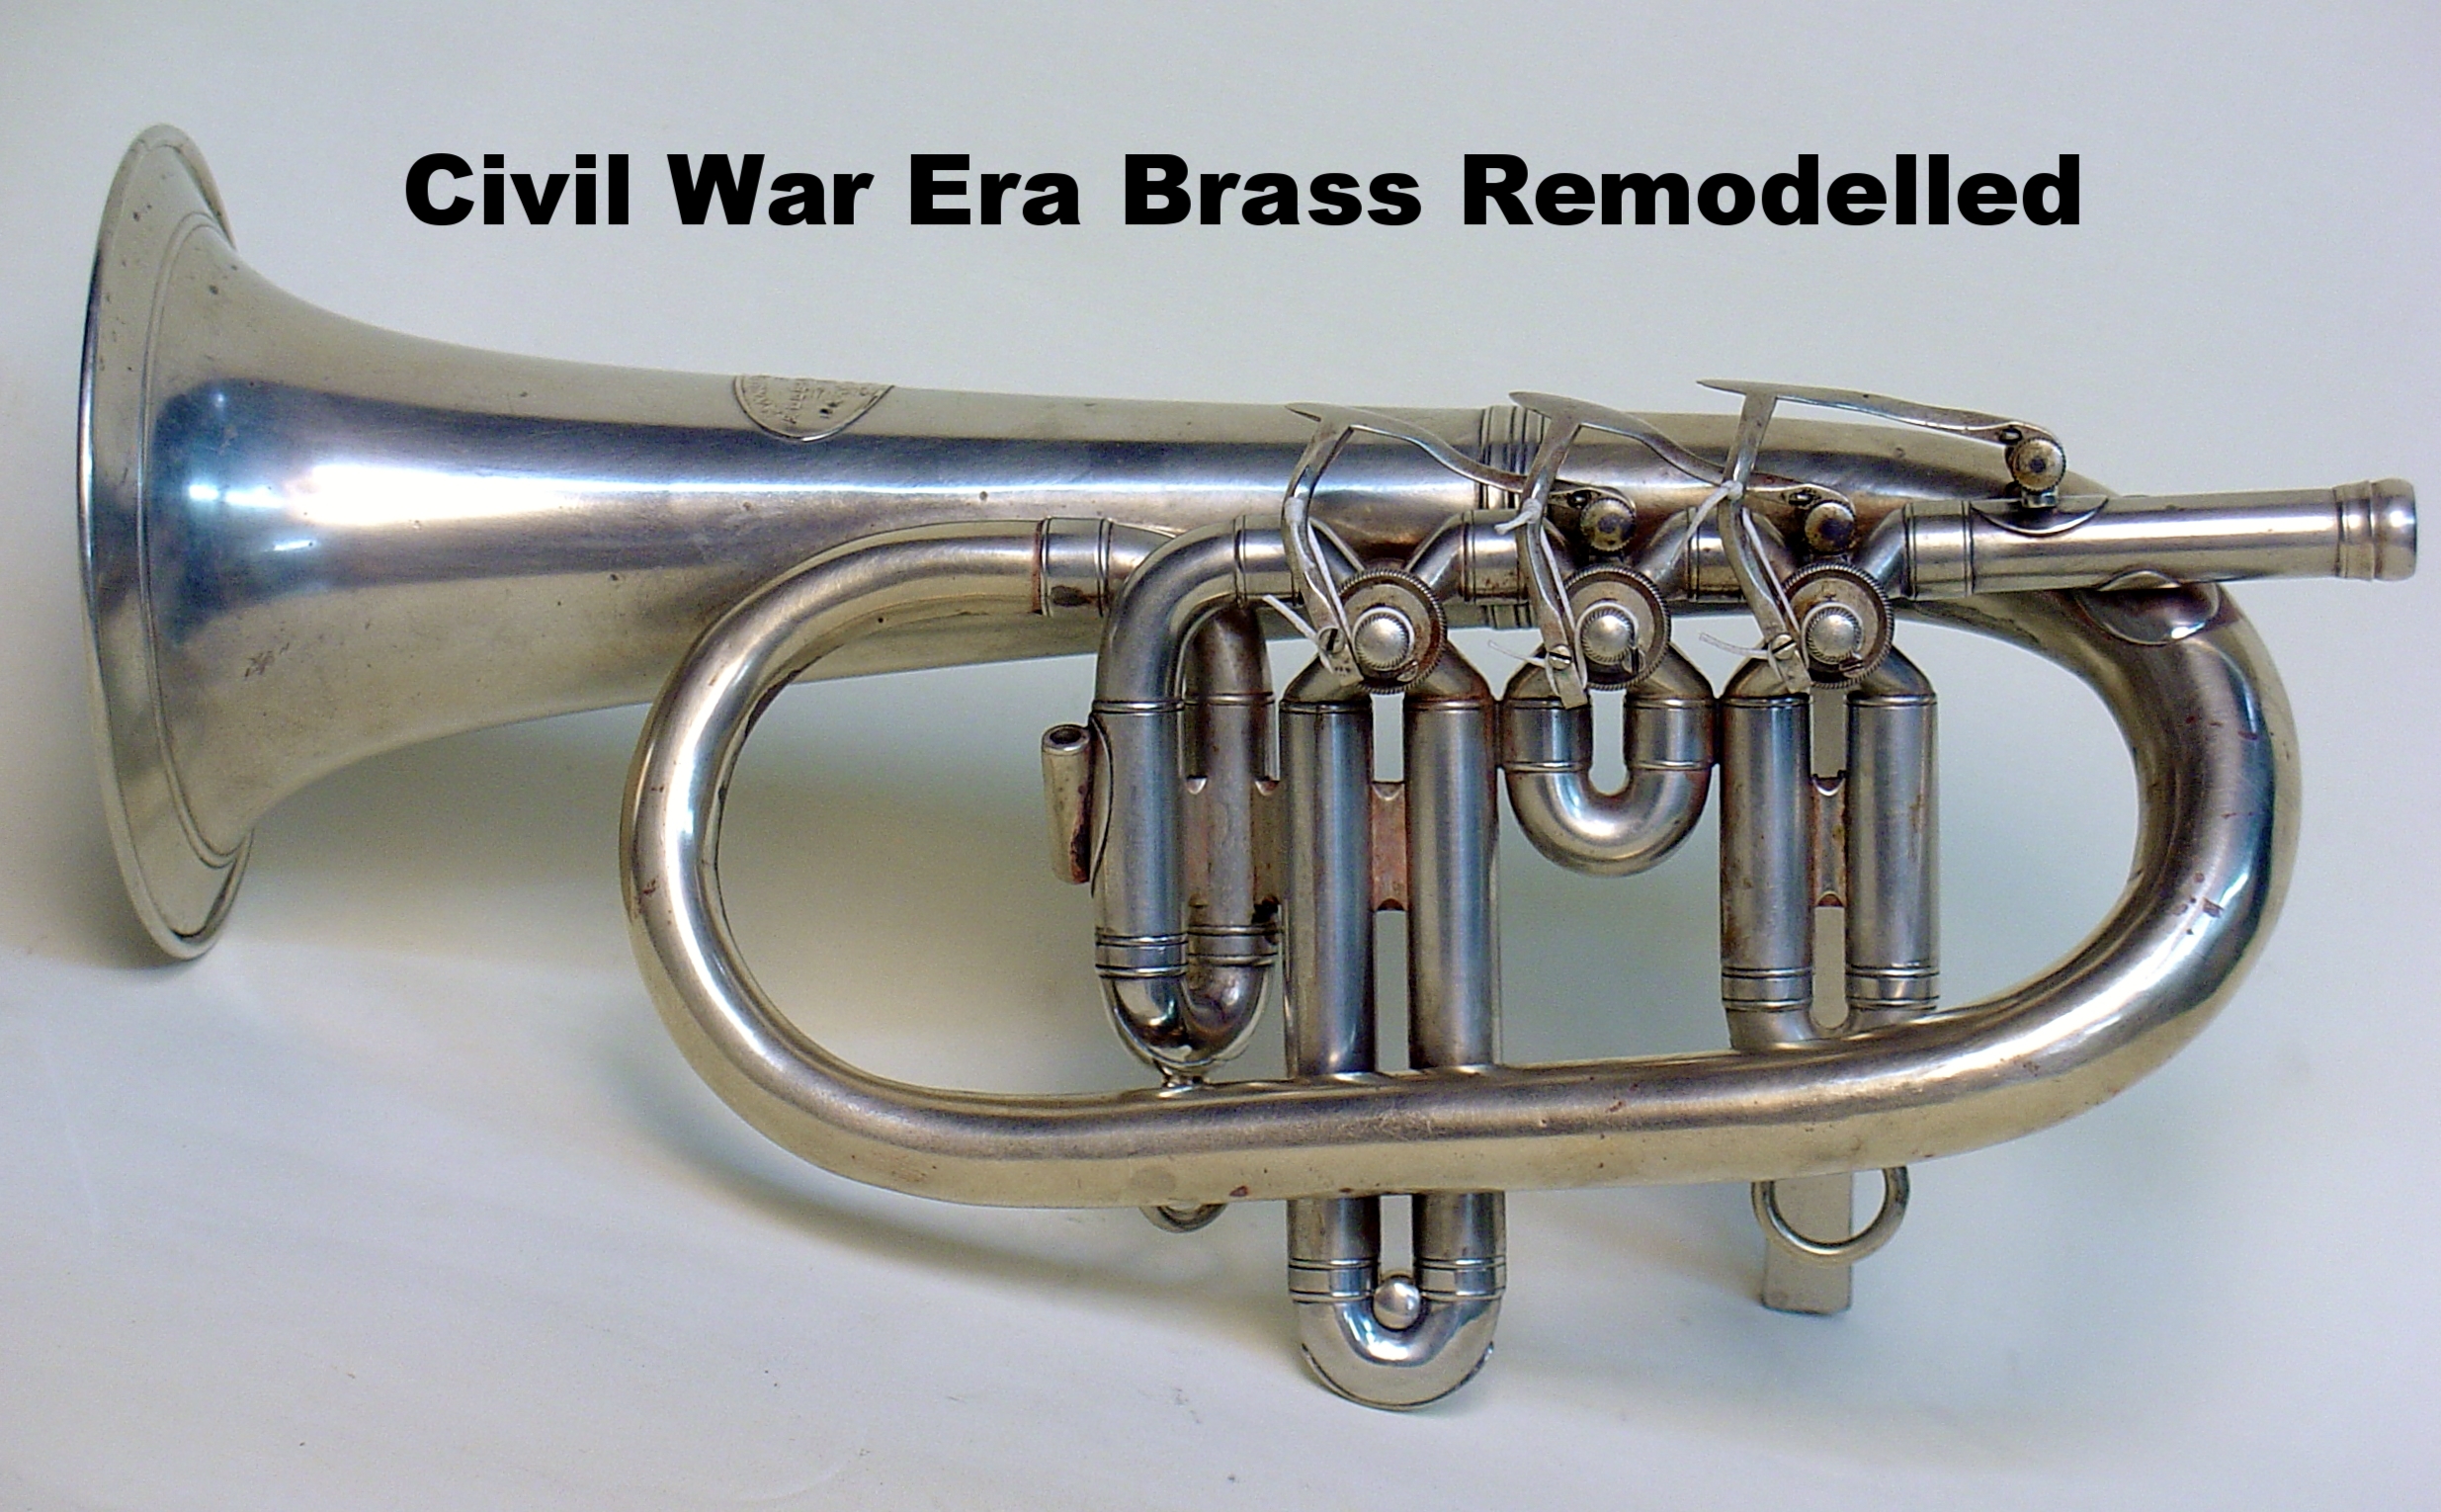 Civil War Era Brass Remodeled